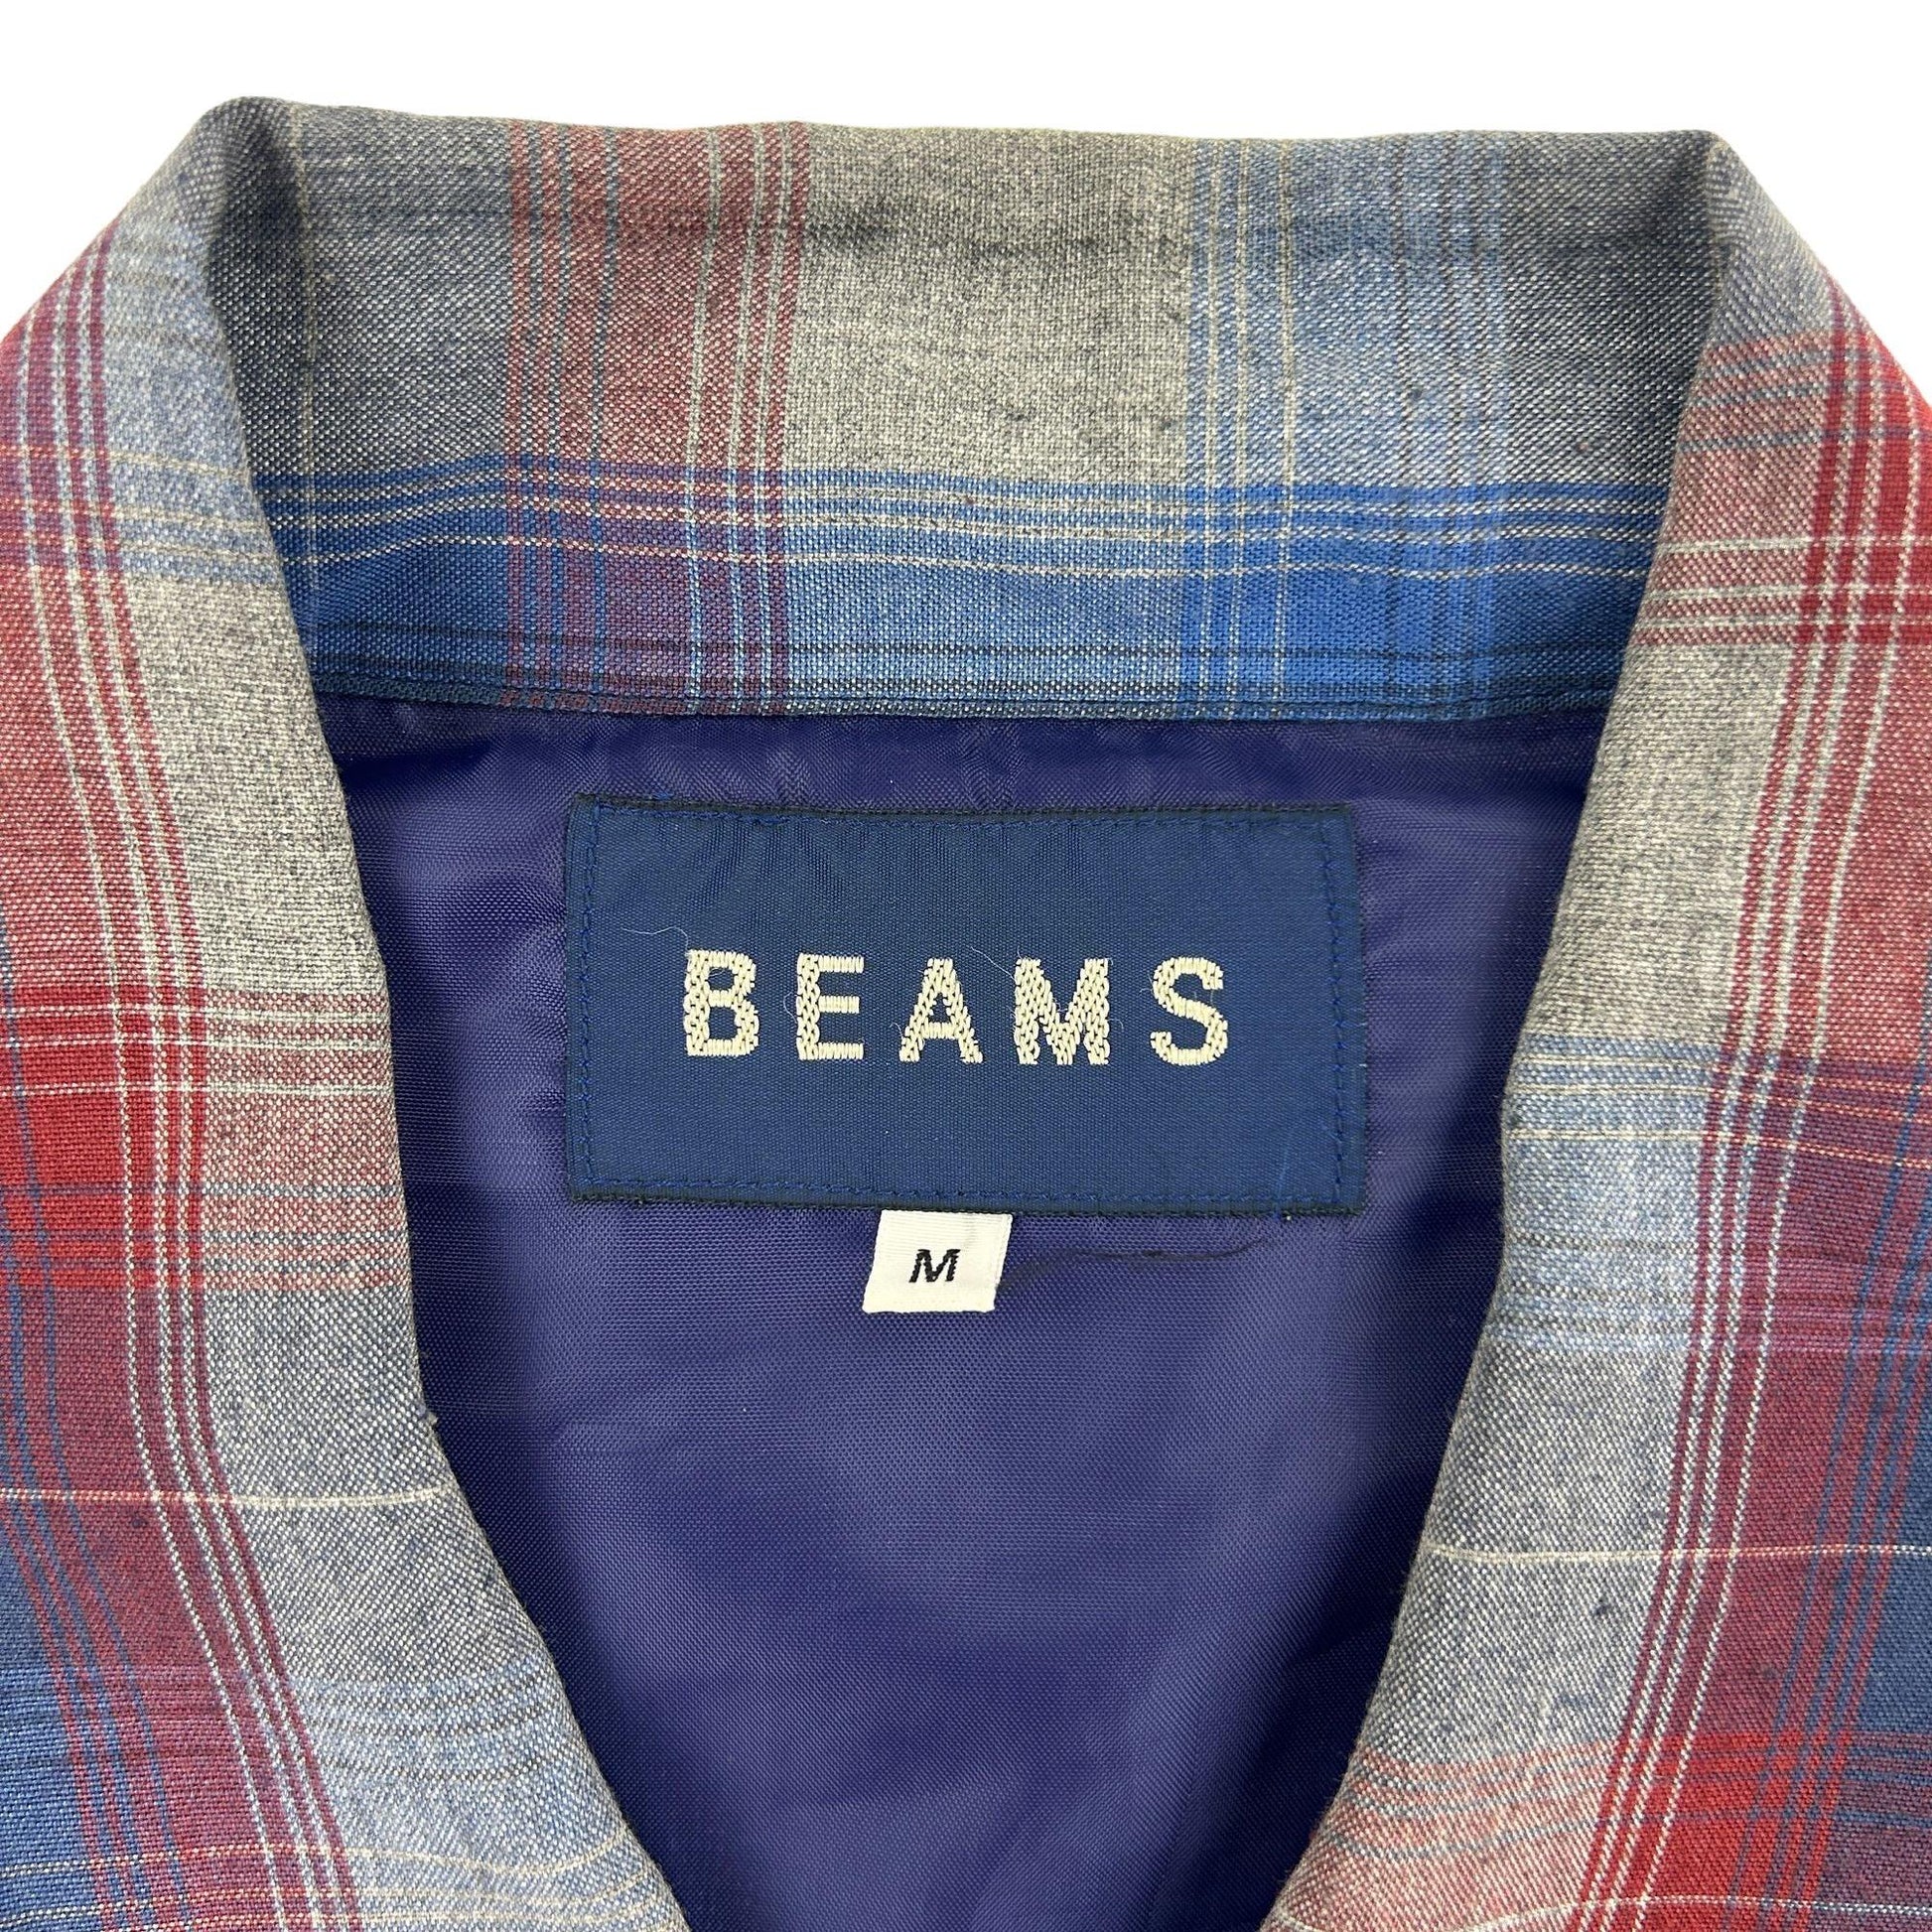 Vintage Beams Plaid Button-Up Shirt Size M - Known Source